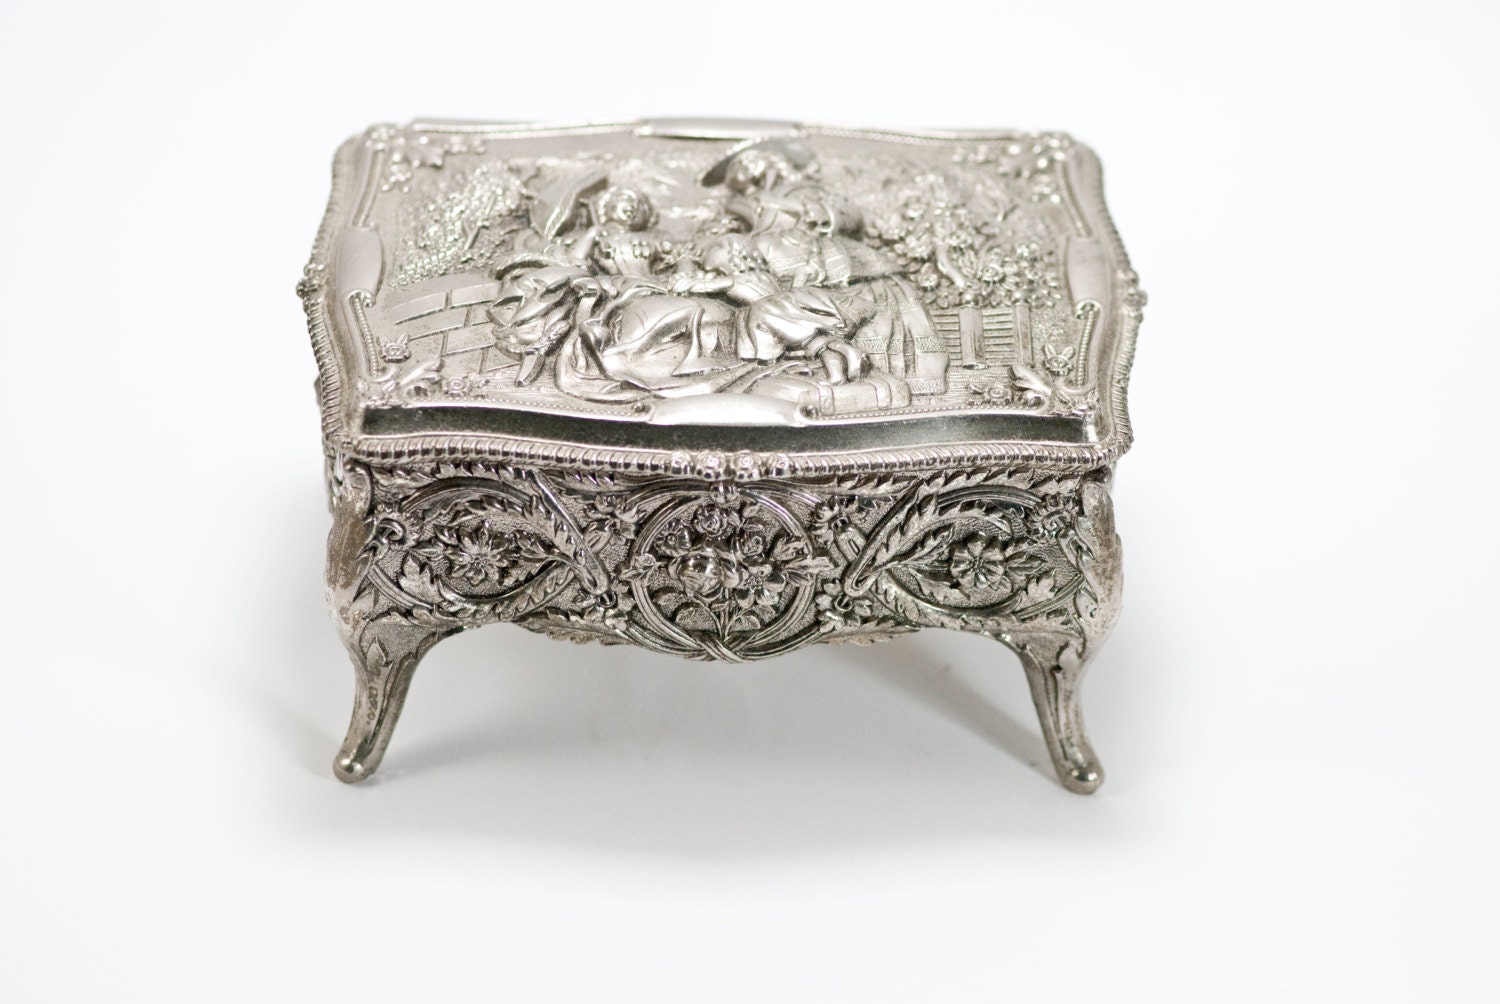 Antique Victorian Jewelry Casket Trinket Box Silver